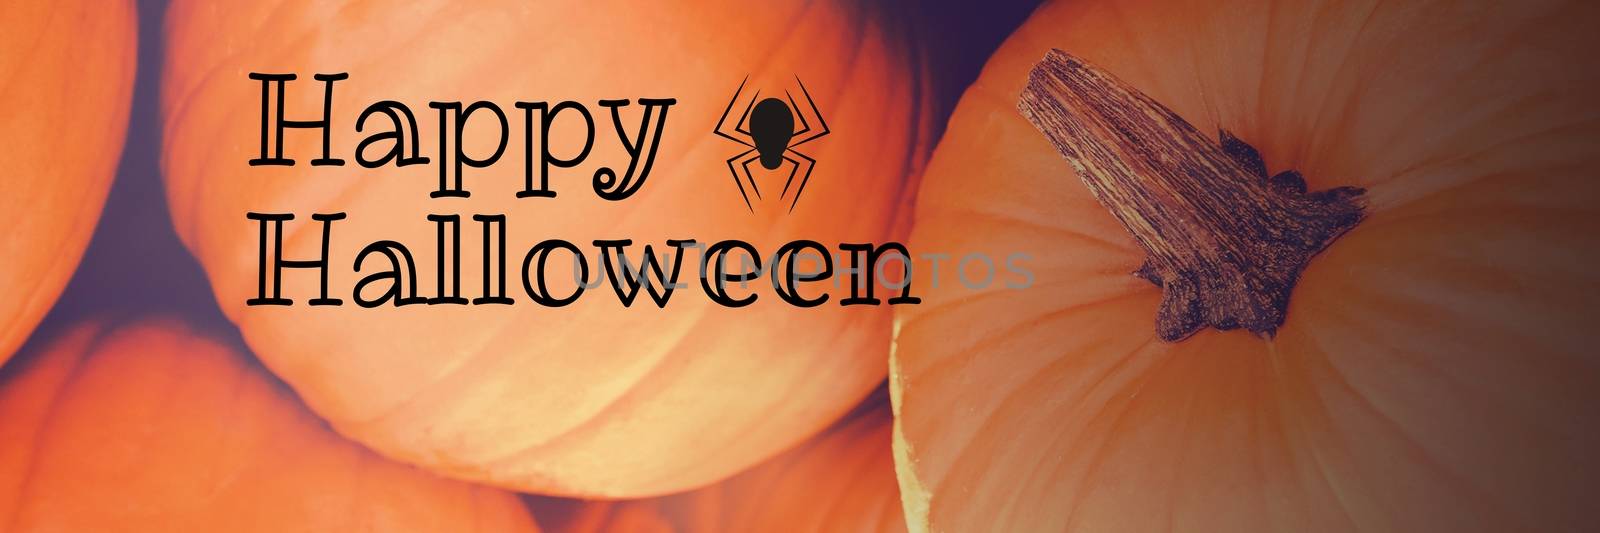 Digital composite of Happy Halloween text with pumpkins